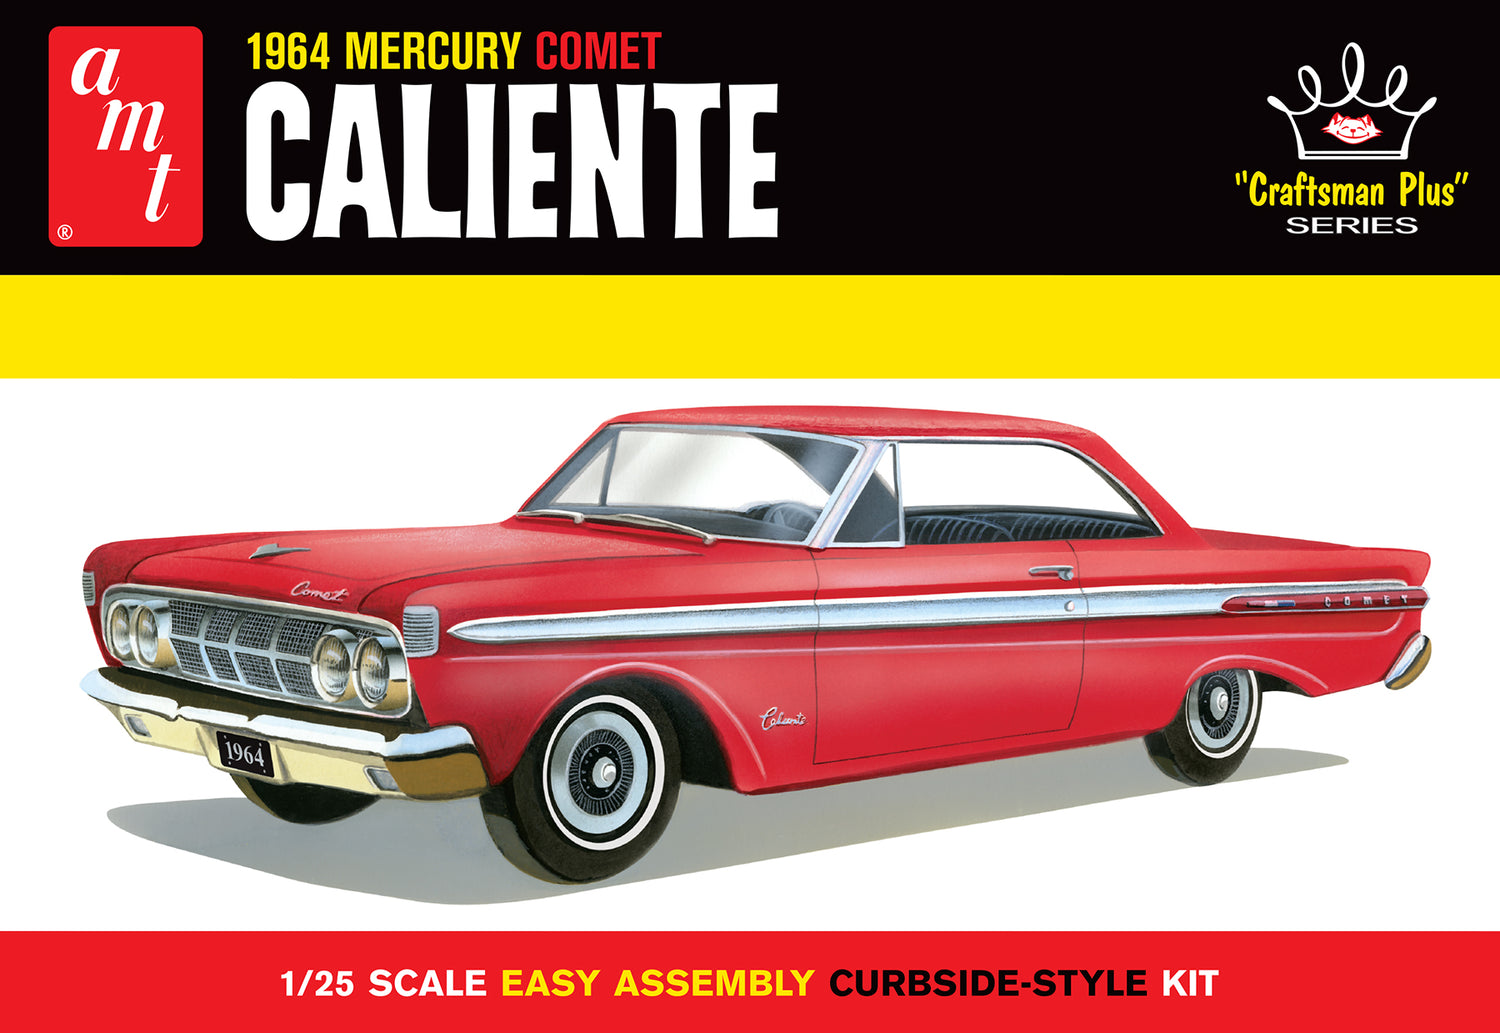 AMT 1964 Mercury Comet "Craftsman Plus Series" 1:25 Scale Model Kit